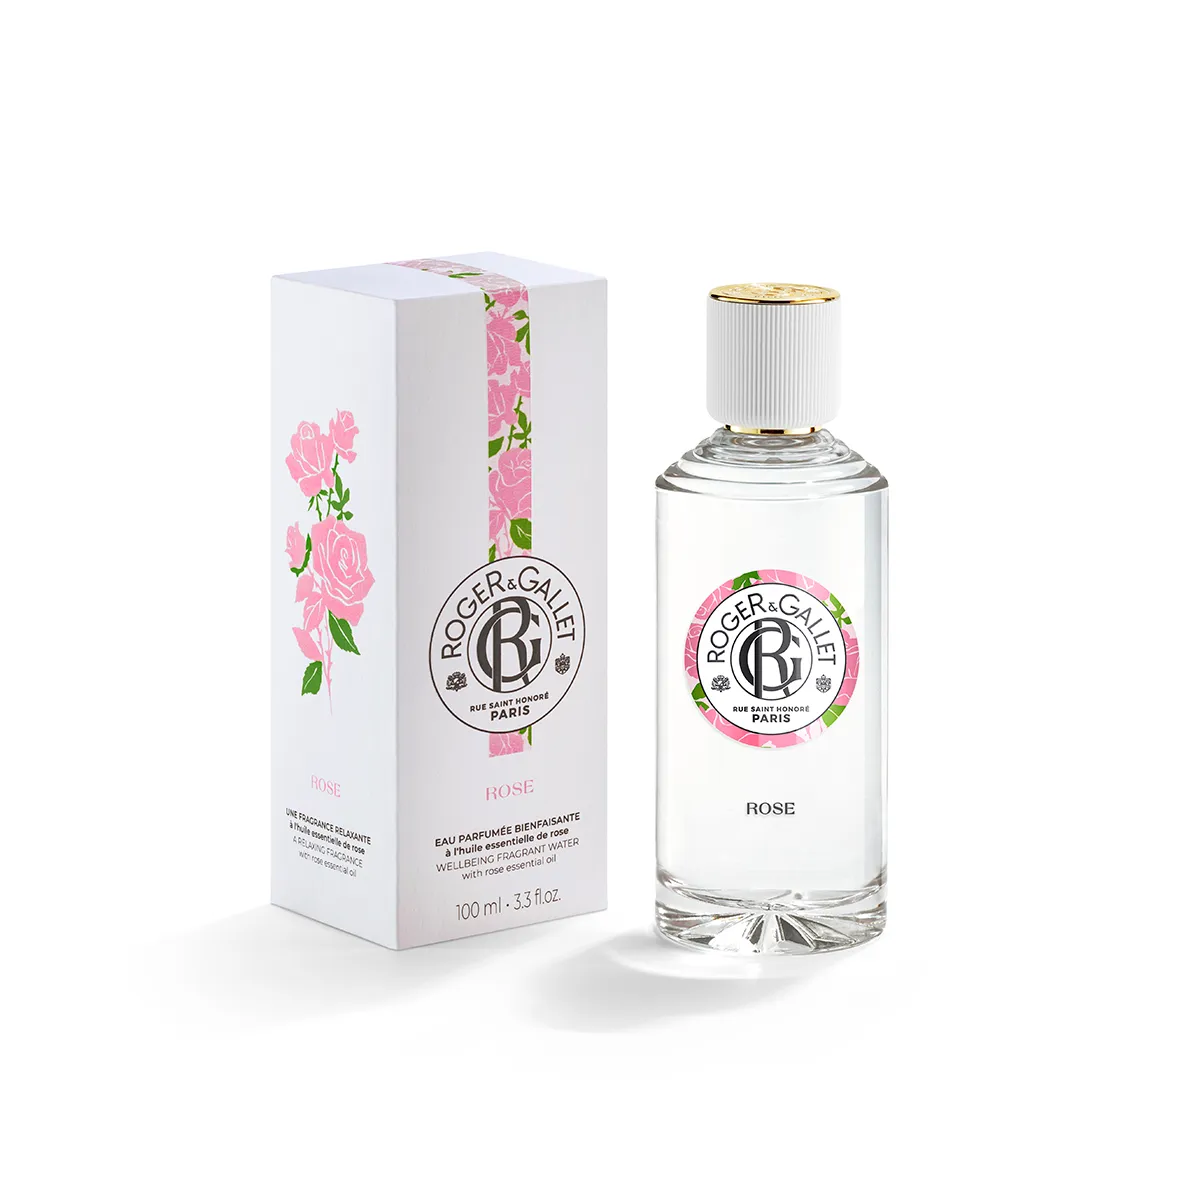 R&G Rose Eau Parfumée 100 ml Acqua profumata